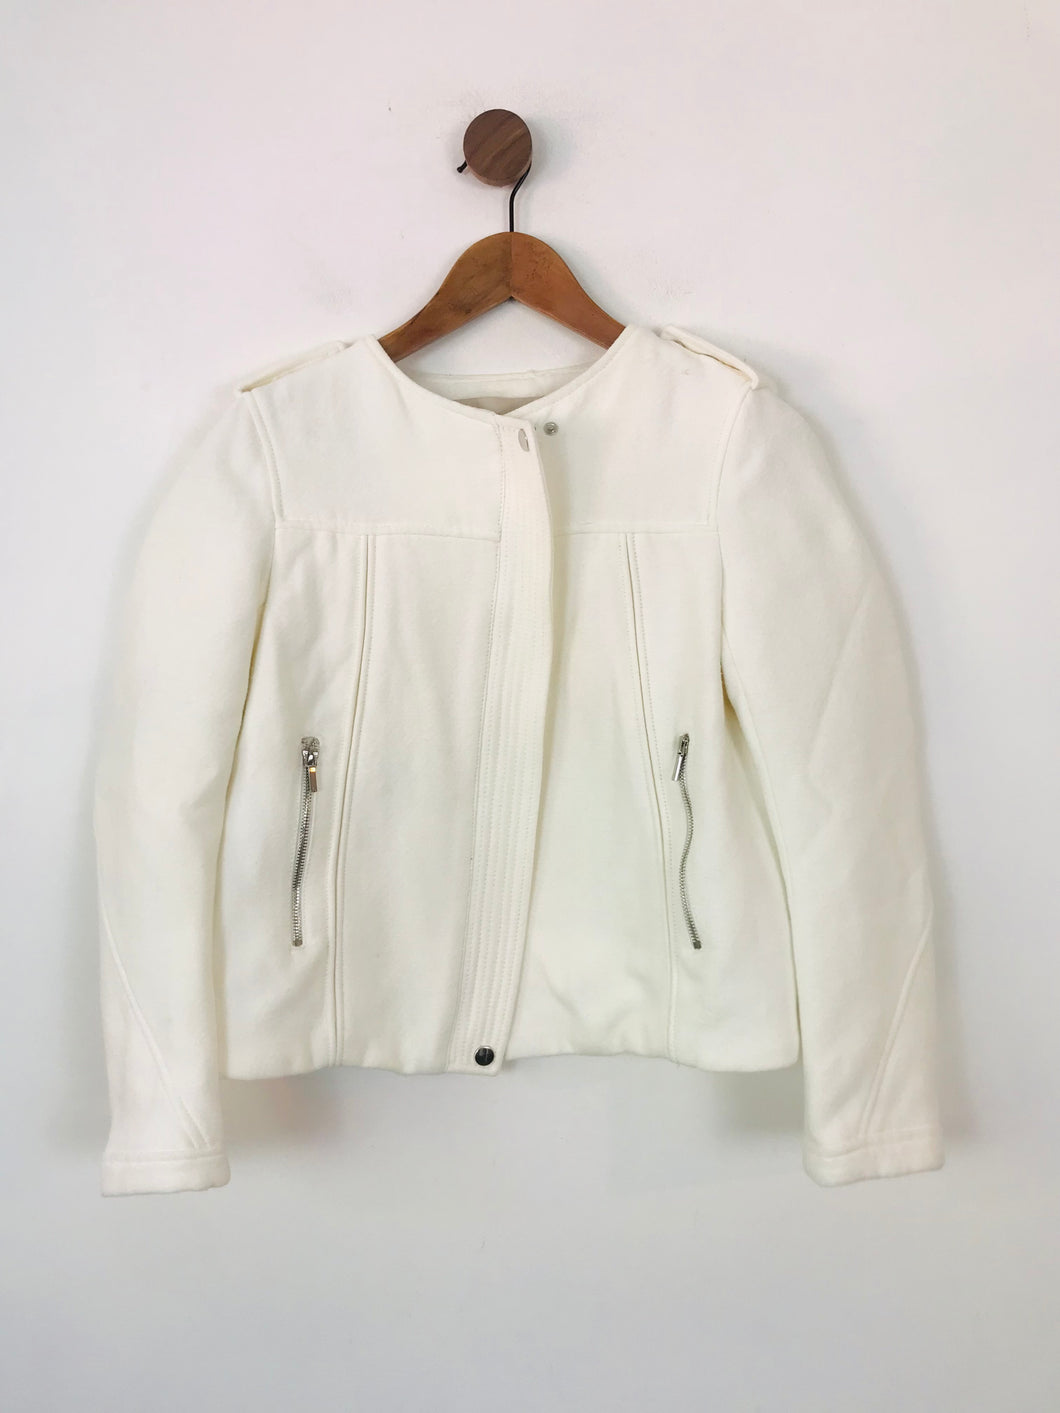 Zara Women's Cotten Blend Biker Jacket | M UK10-12 | White